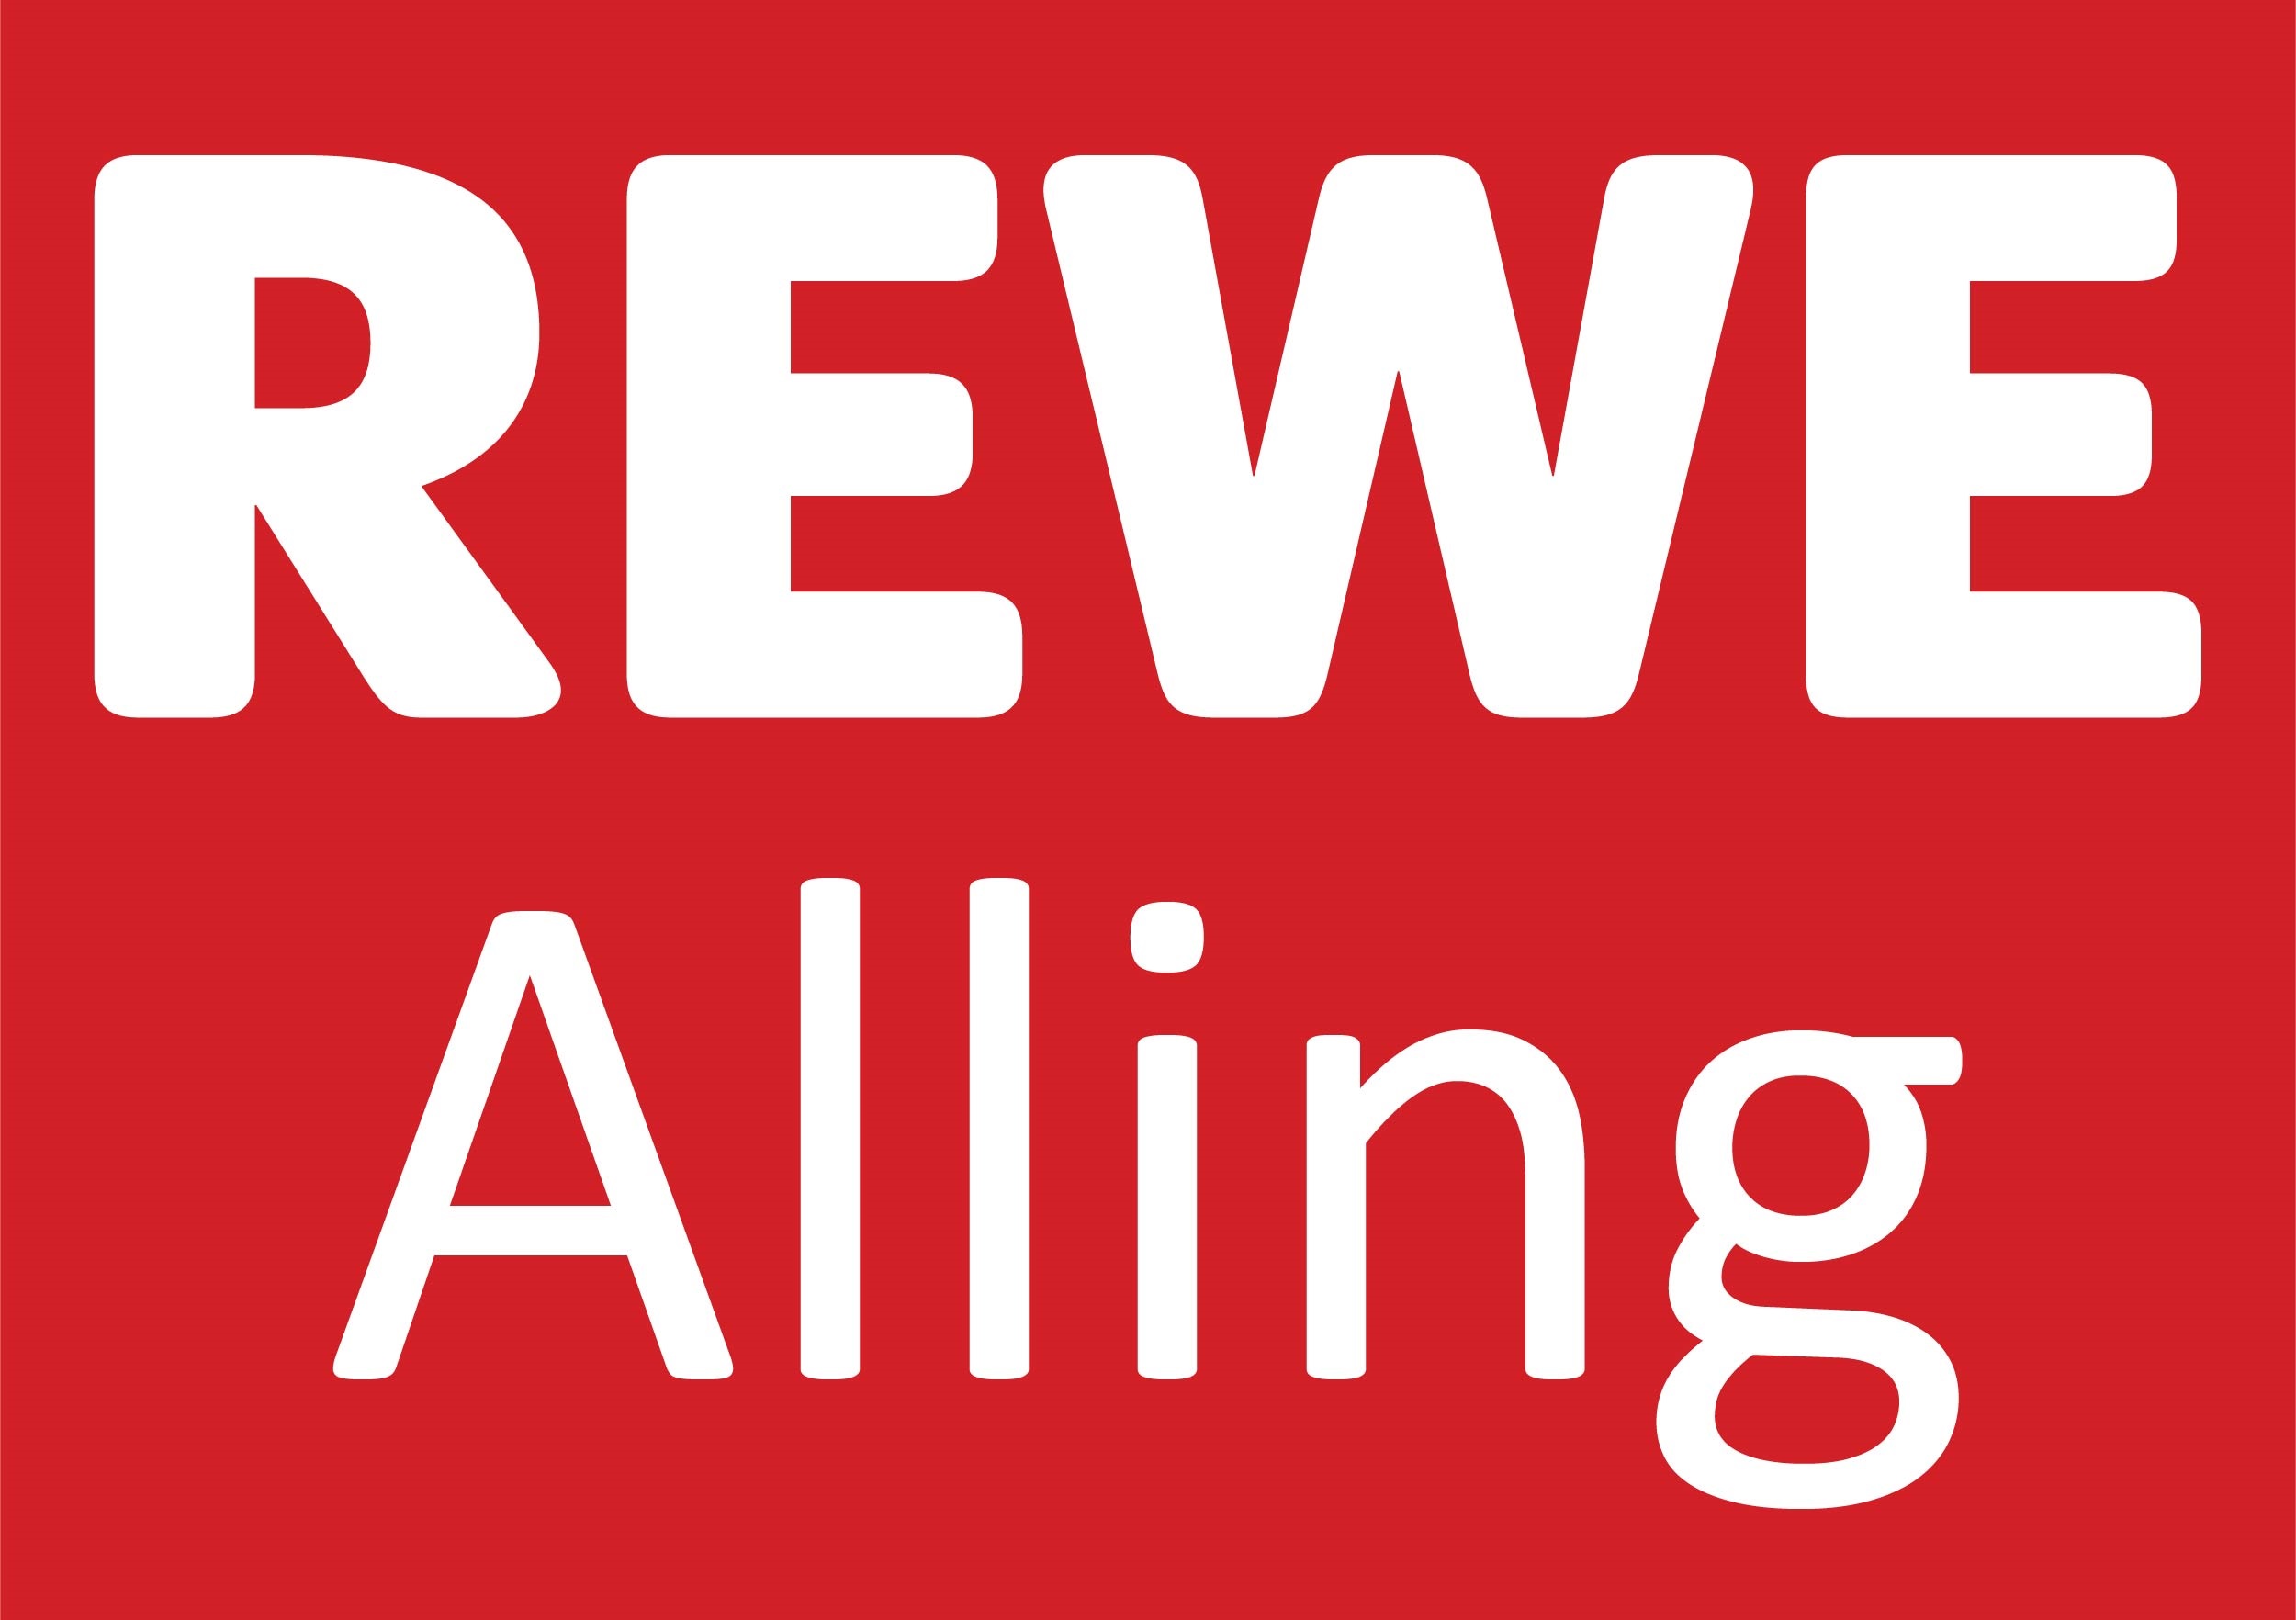 Rewe Alling